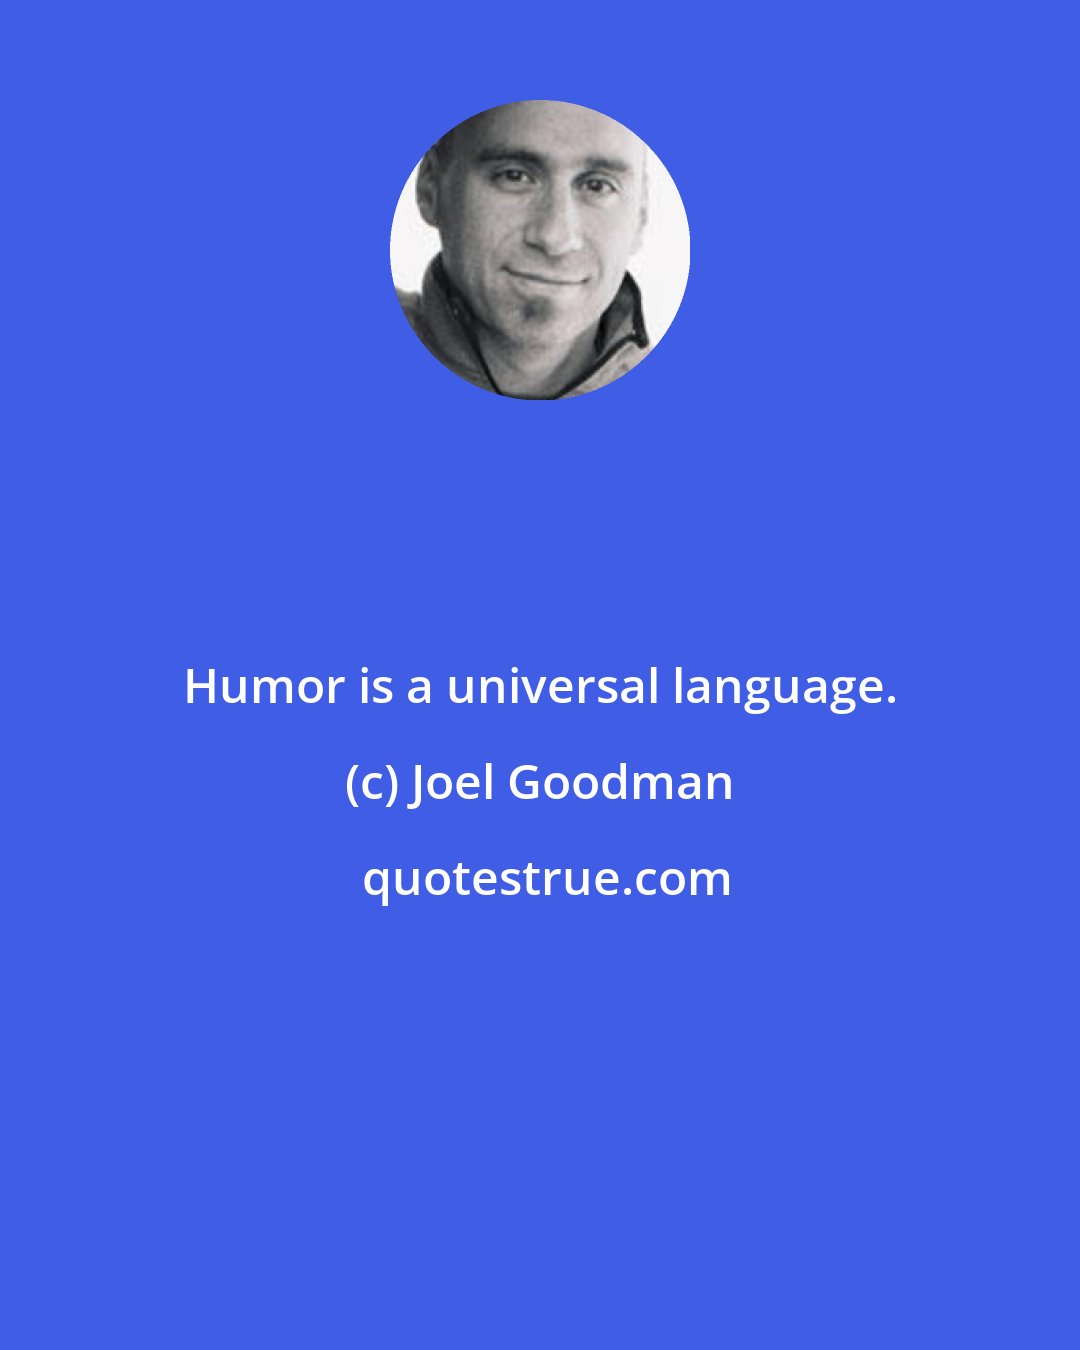 Joel Goodman: Humor is a universal language.